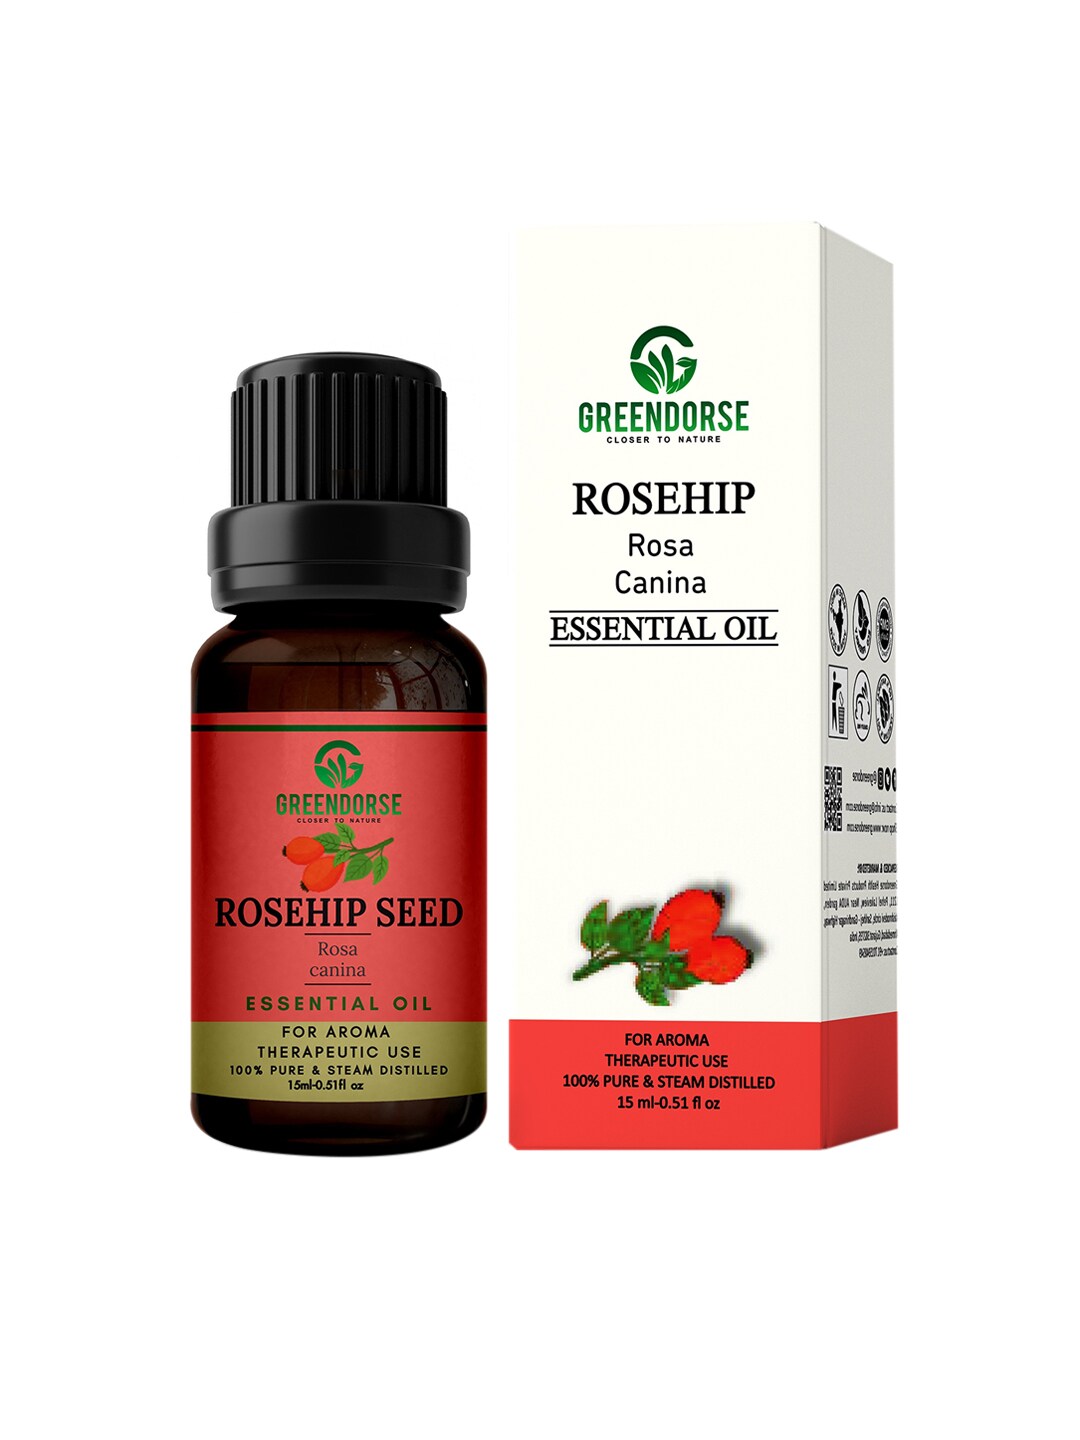 GREENDORSE Rosehip Seed 100% Pure & Steam Distilled Rosa Canina Essential Oil - 15 ml Price in India